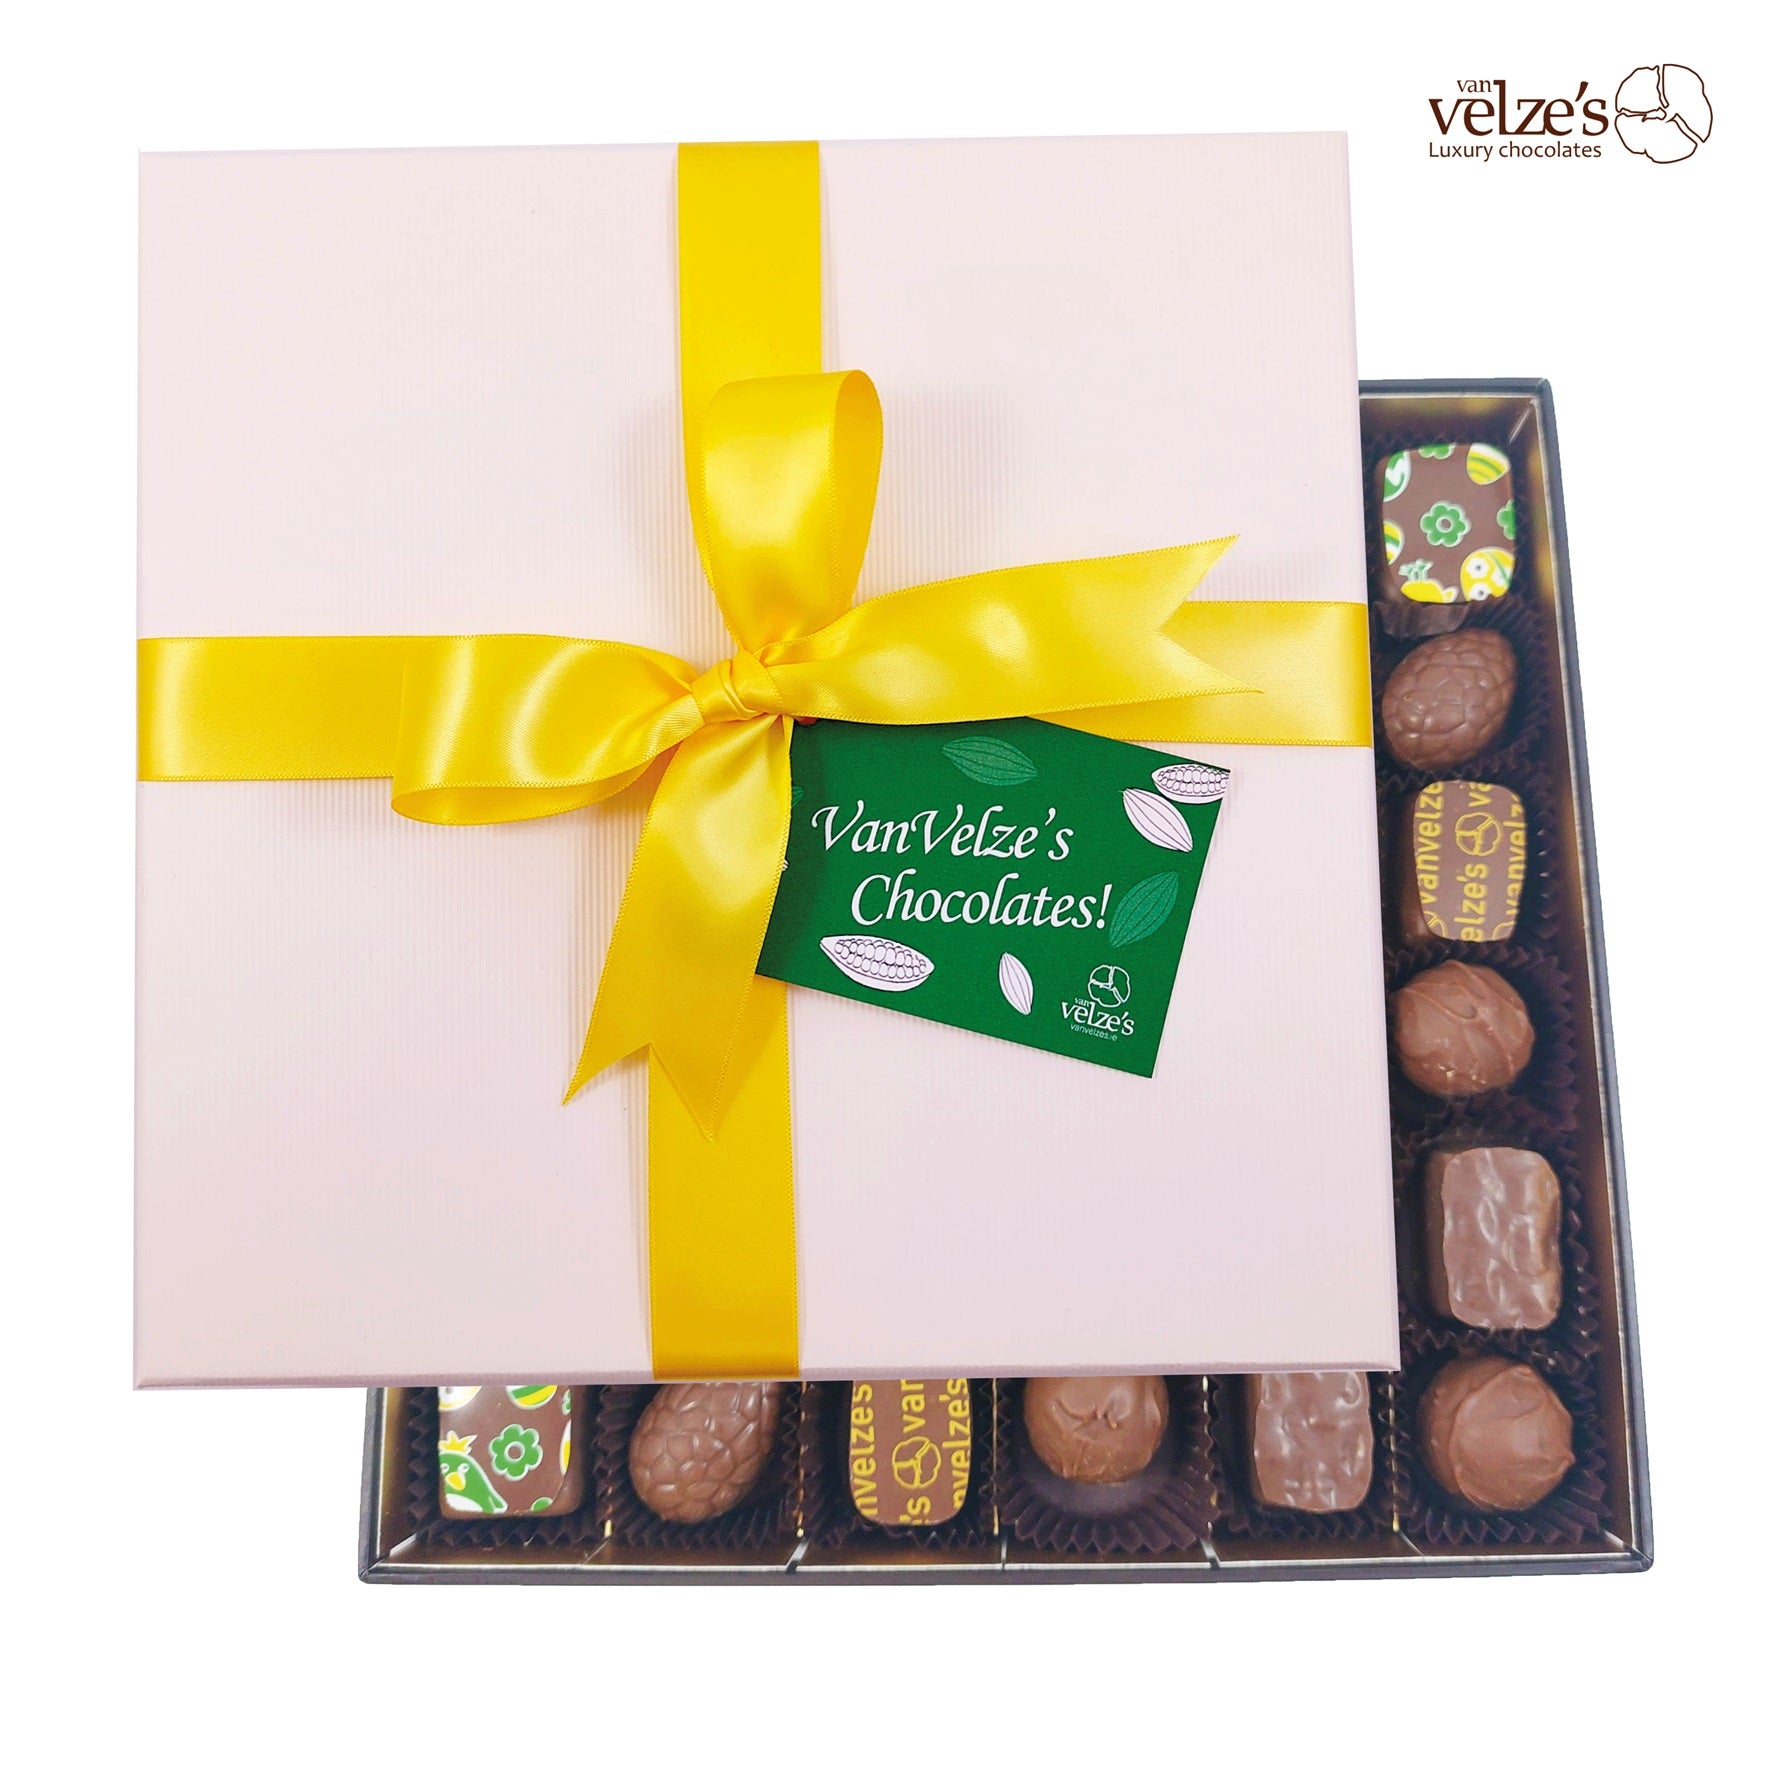 Luxury chocolates, County Mayo Ireland, West of Ireland, Chocolate gift, Artisan chocolates, Easter chocolate Gifts